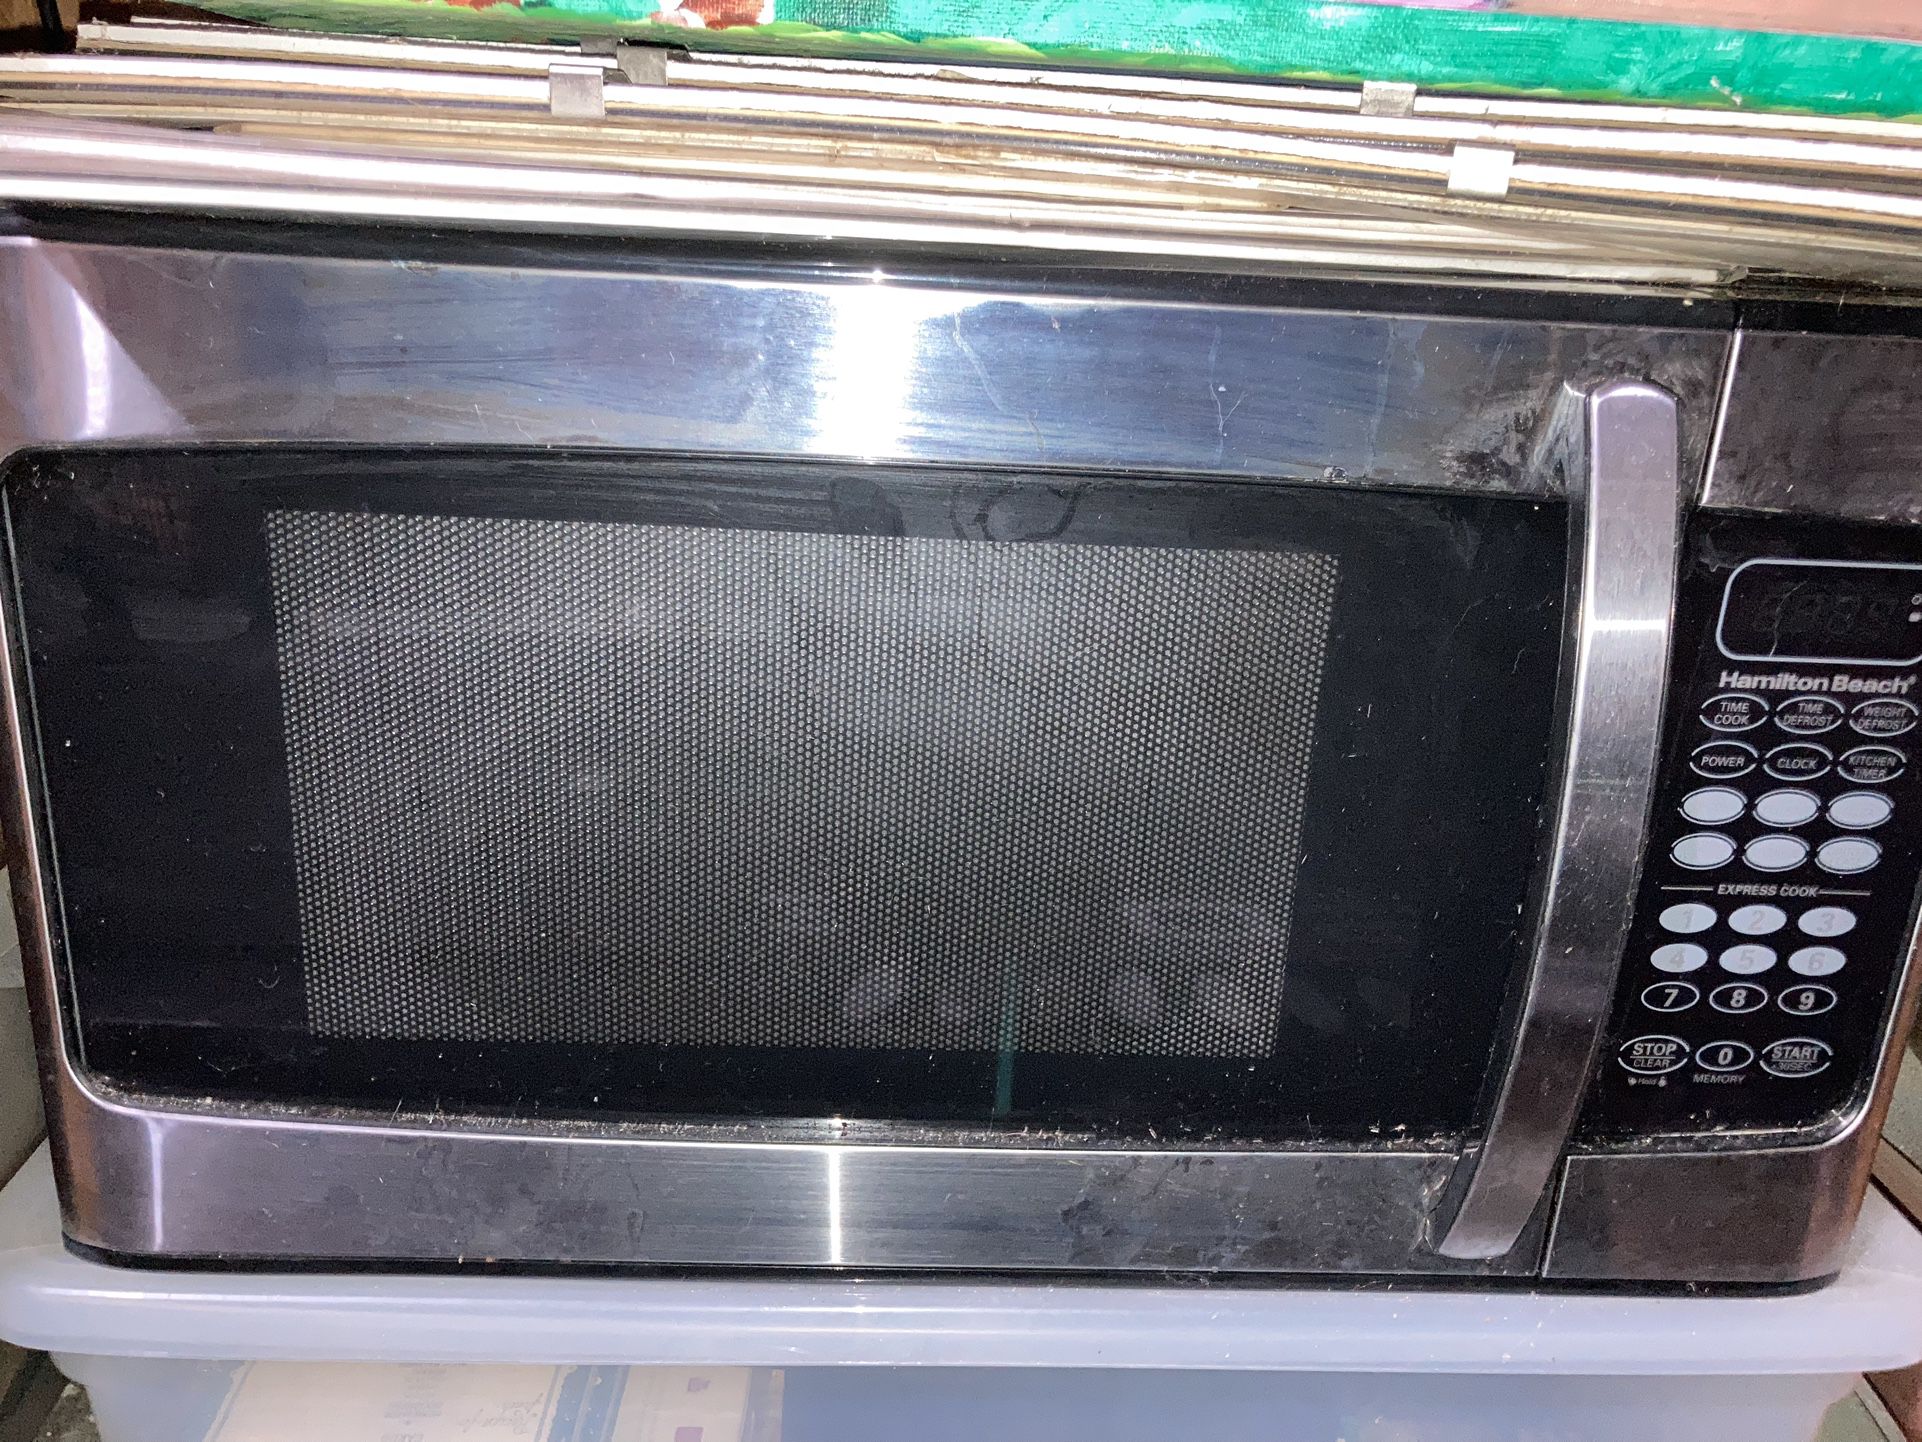 Microwave 1000w USED